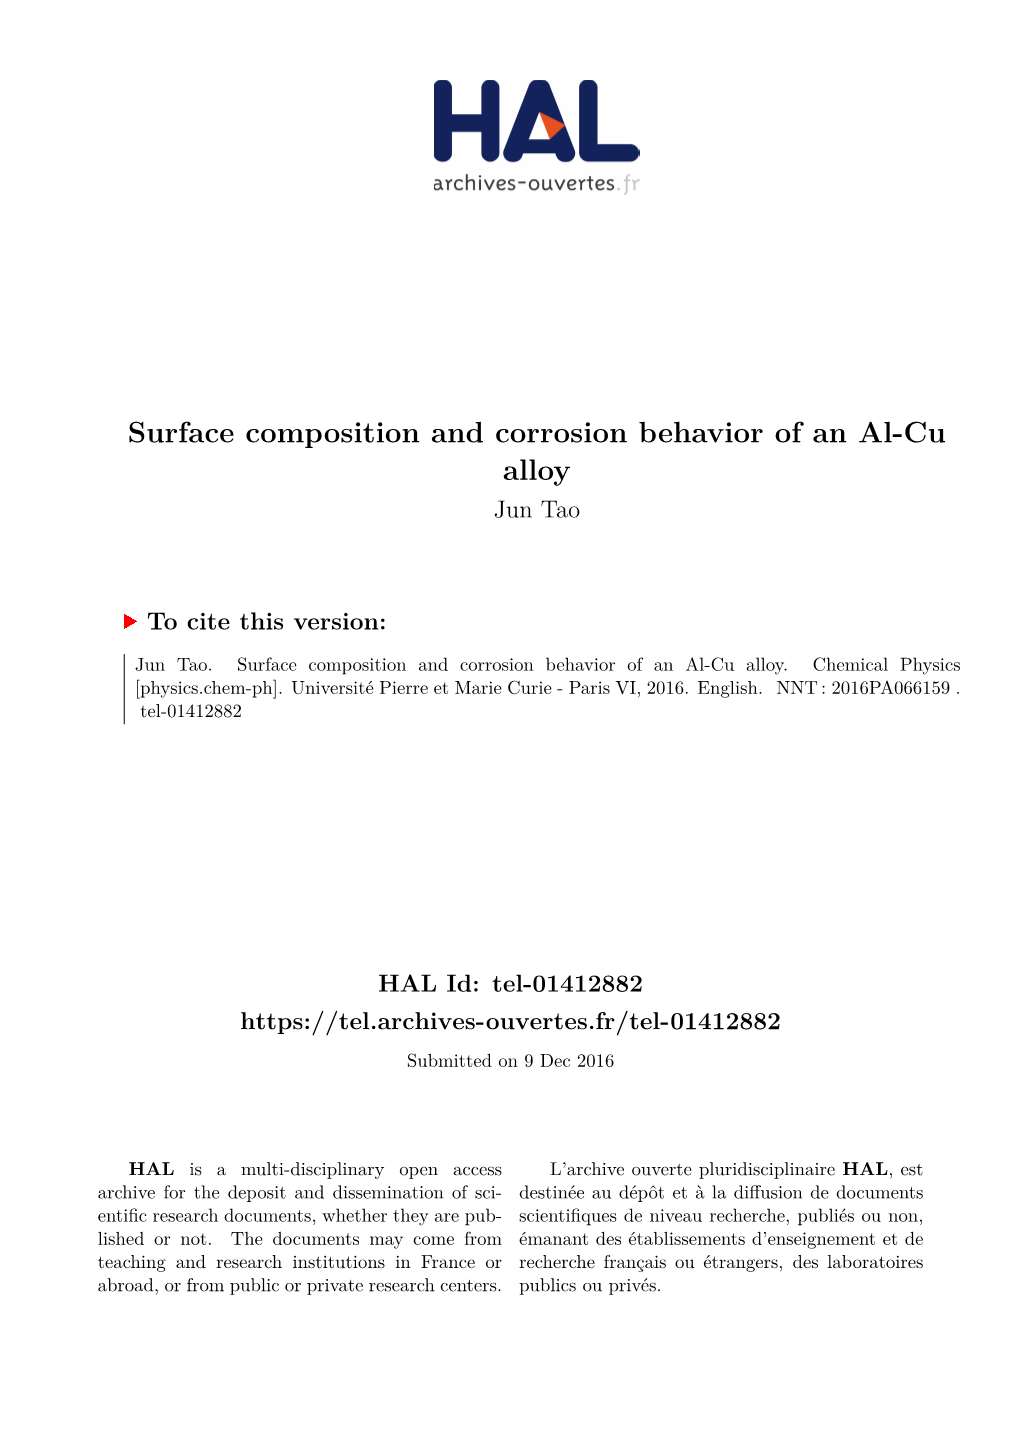 Surface Composition and Corrosion Behavior of an Al-Cu Alloy Jun Tao